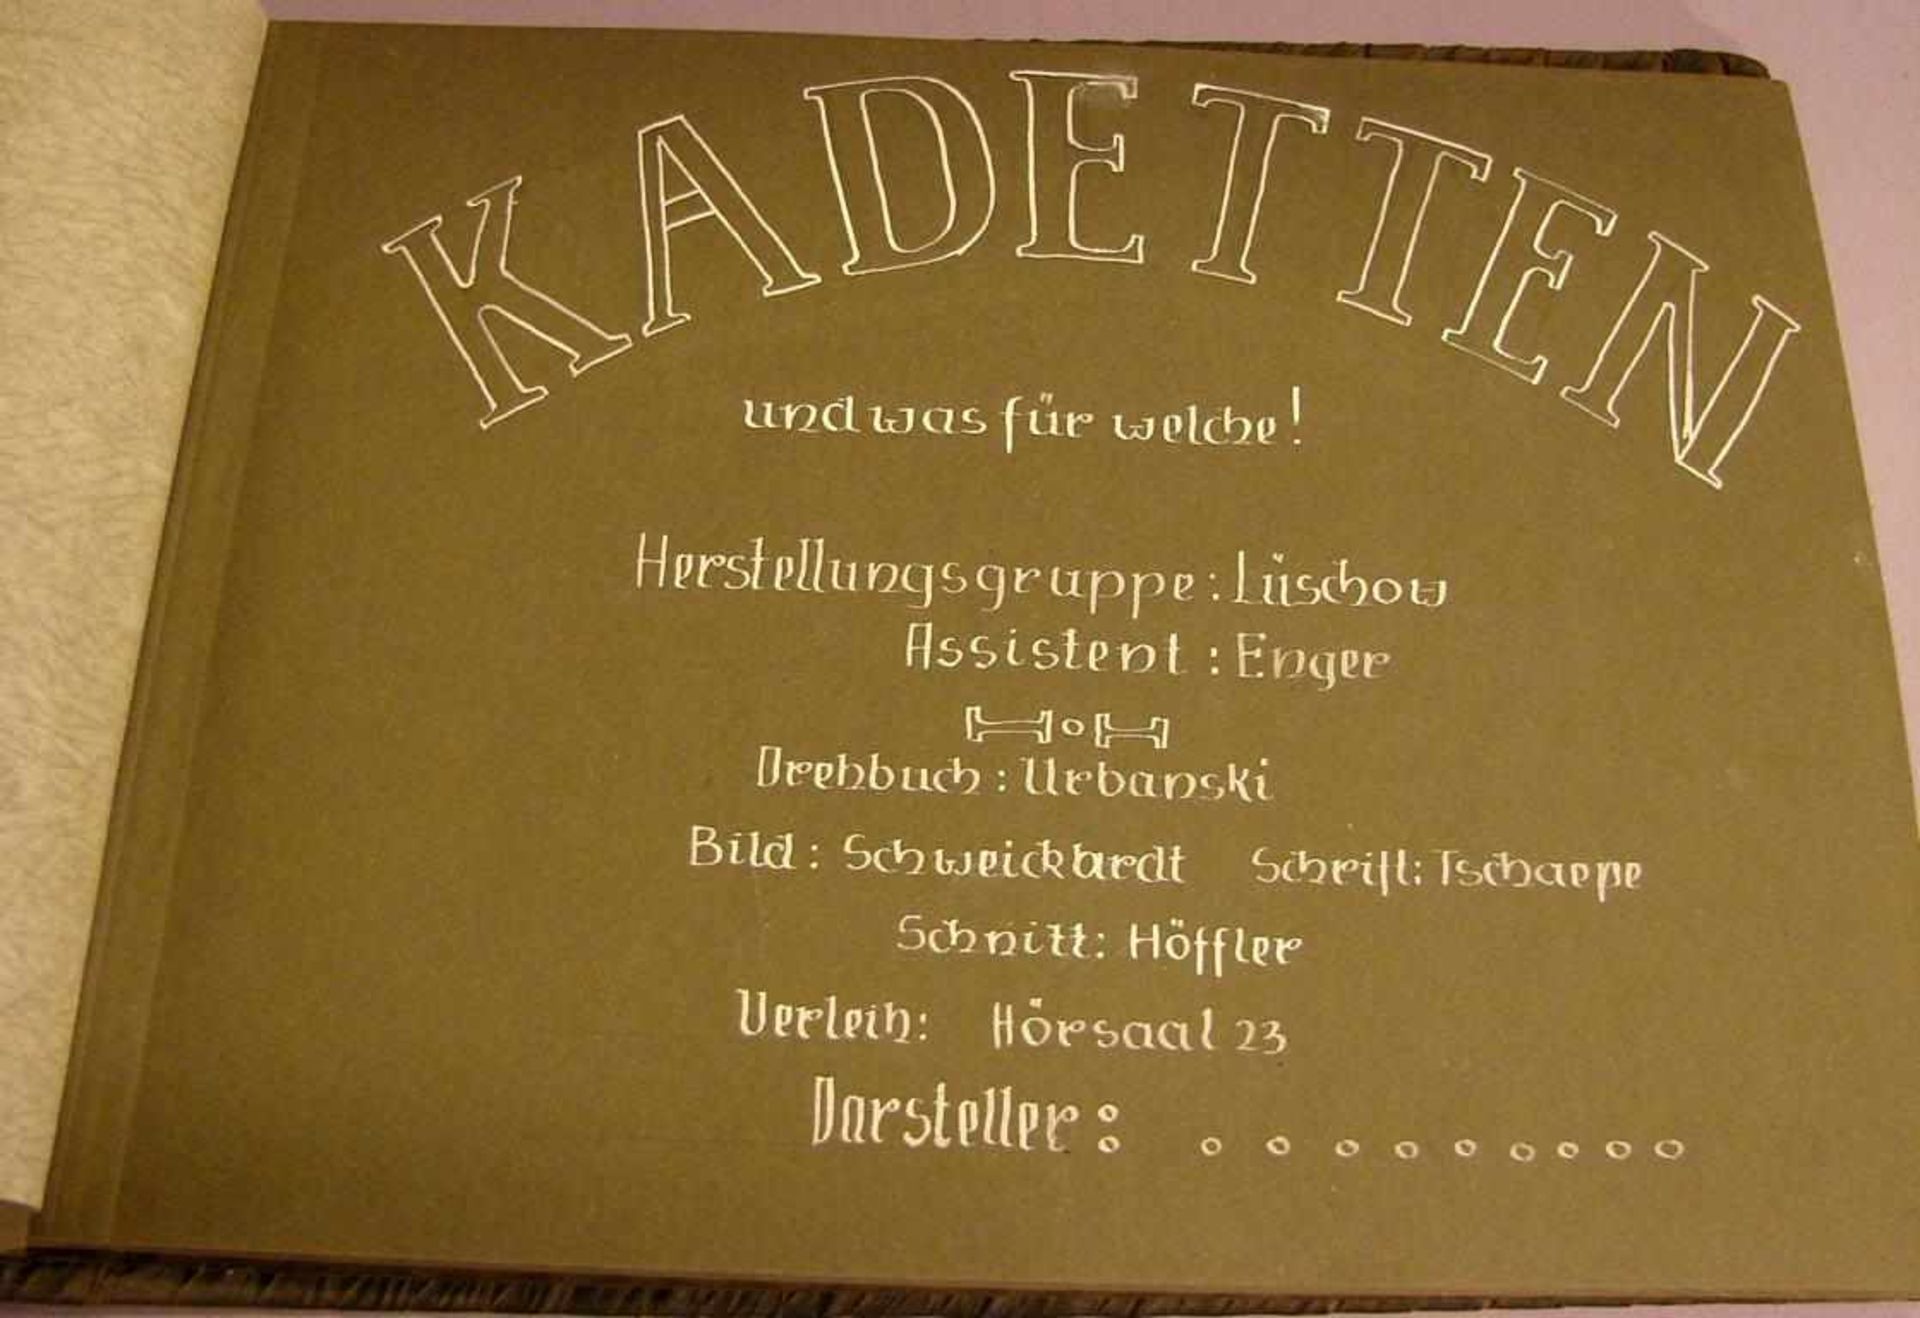 Militärisches Leder Album, "Kadetten", Herstellungsgruppe Lüschow<b - Image 3 of 3